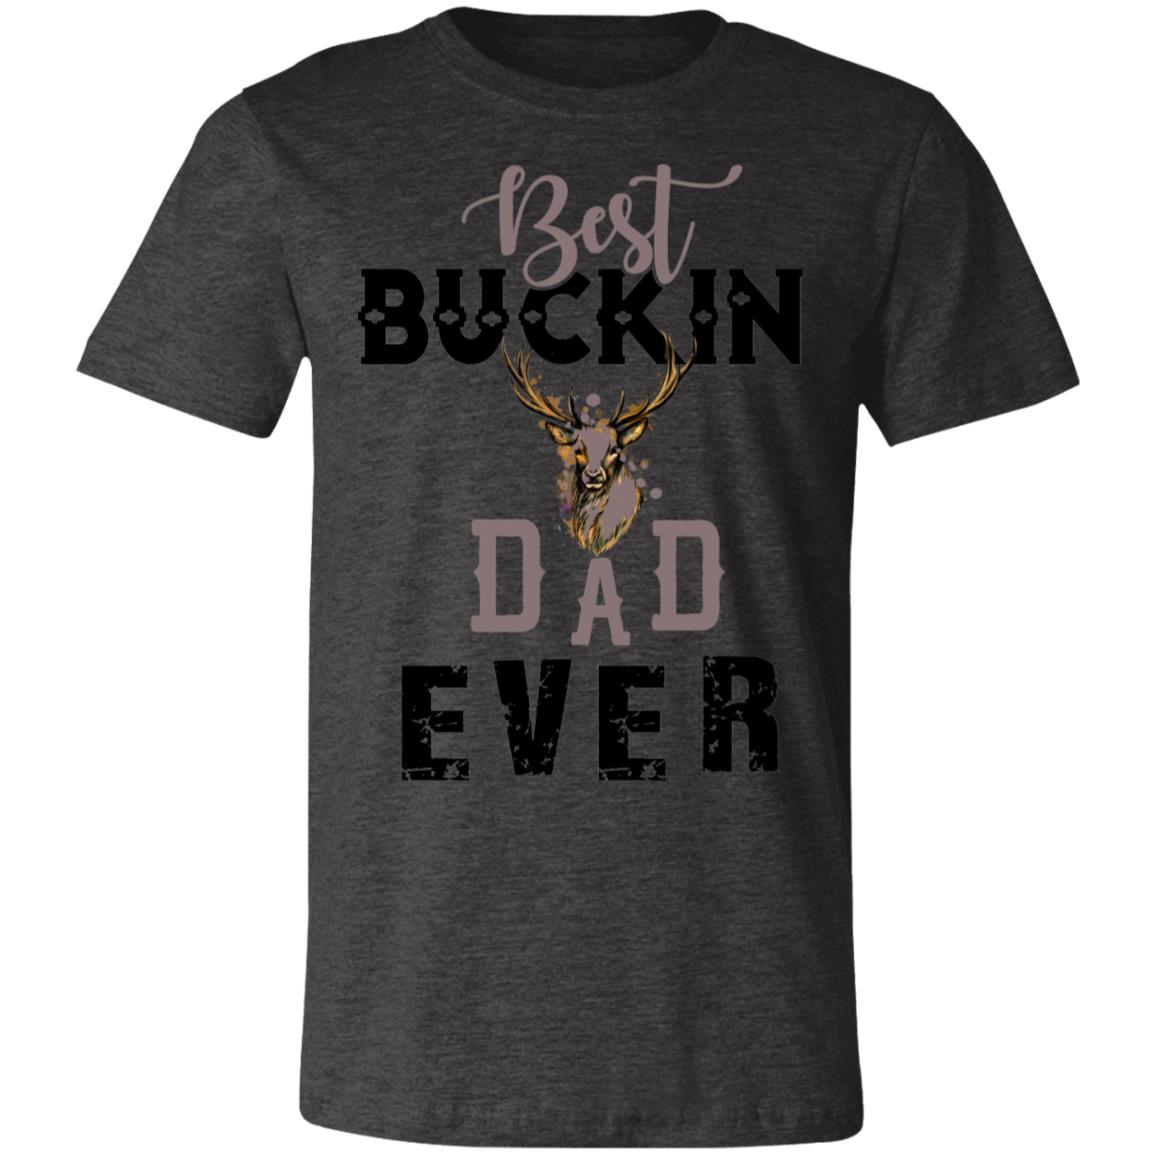 Best Buckin' Dad Hunter Gift T-Shirt-Express Your Love Gifts